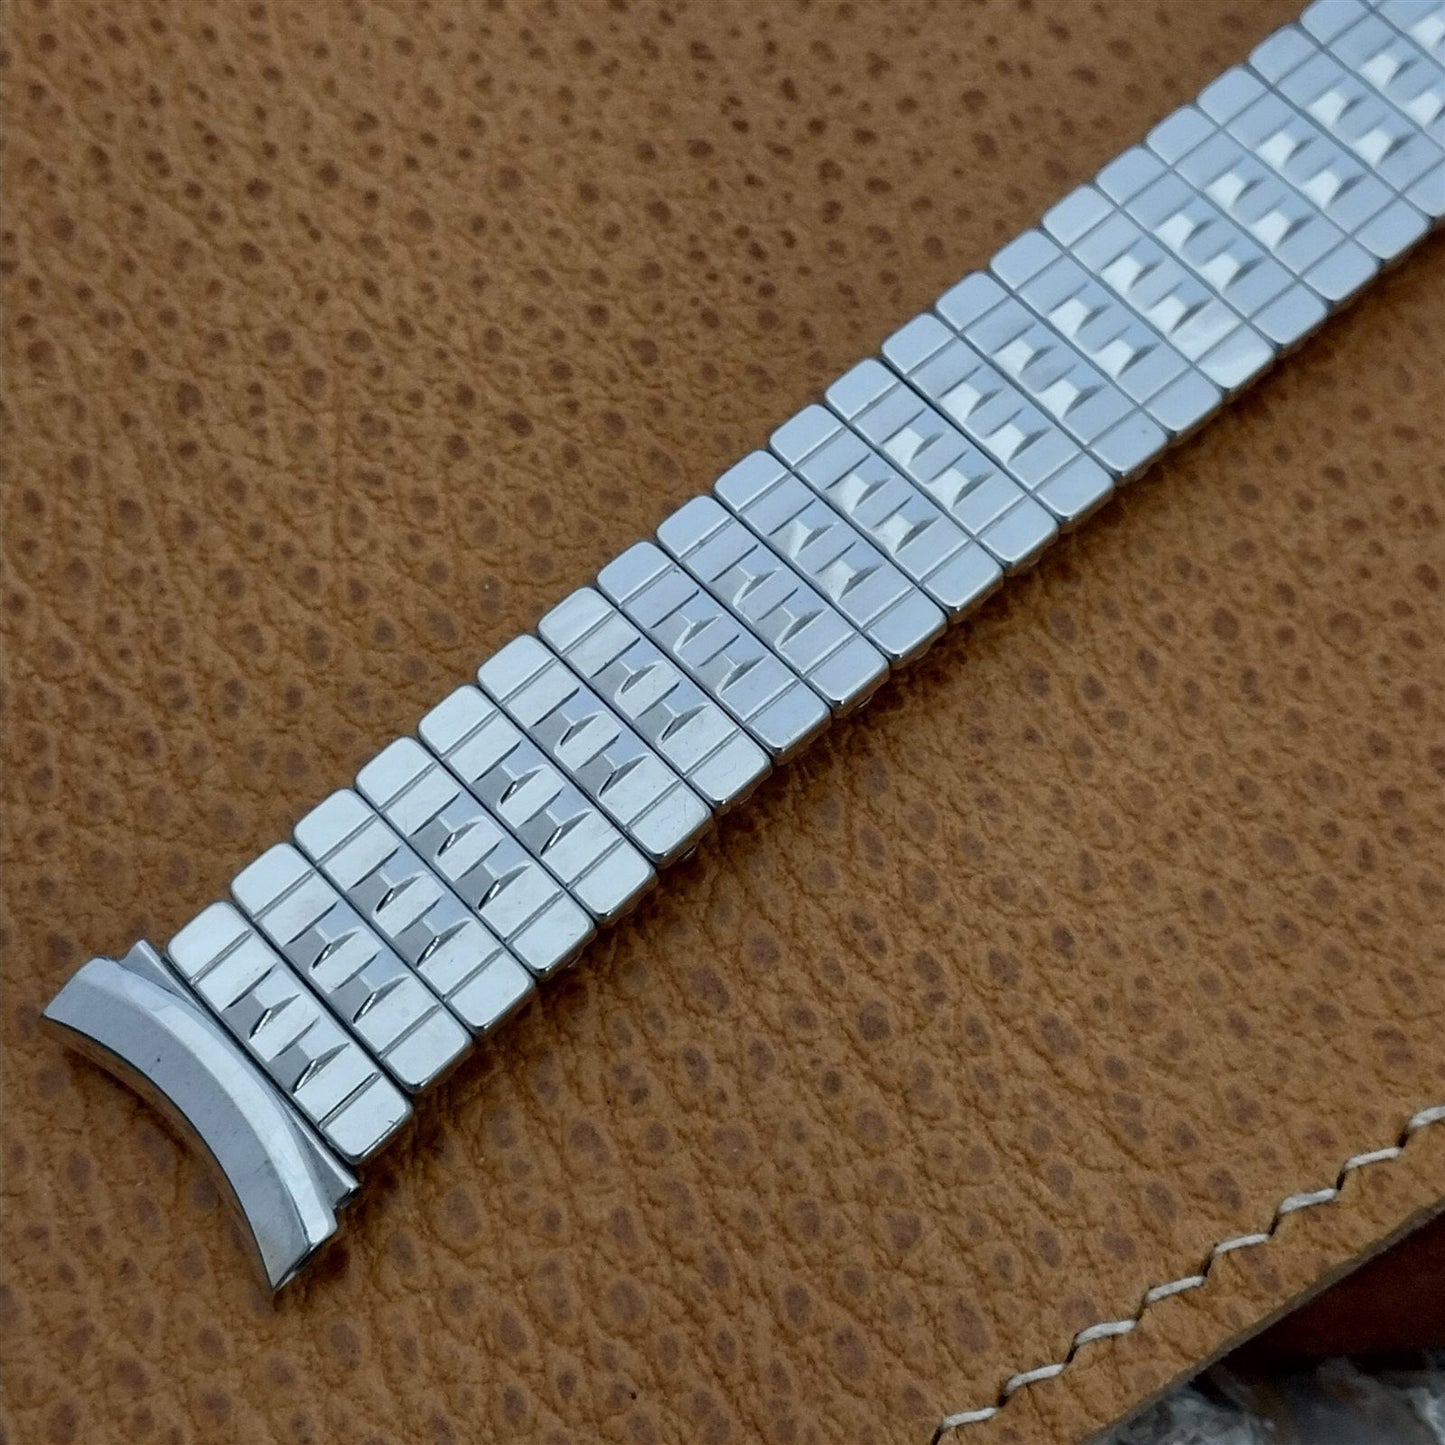 19mm 18mm 17mm 10K White Gold-Filled Kreisler Unused 1960s Vintage Watch Band